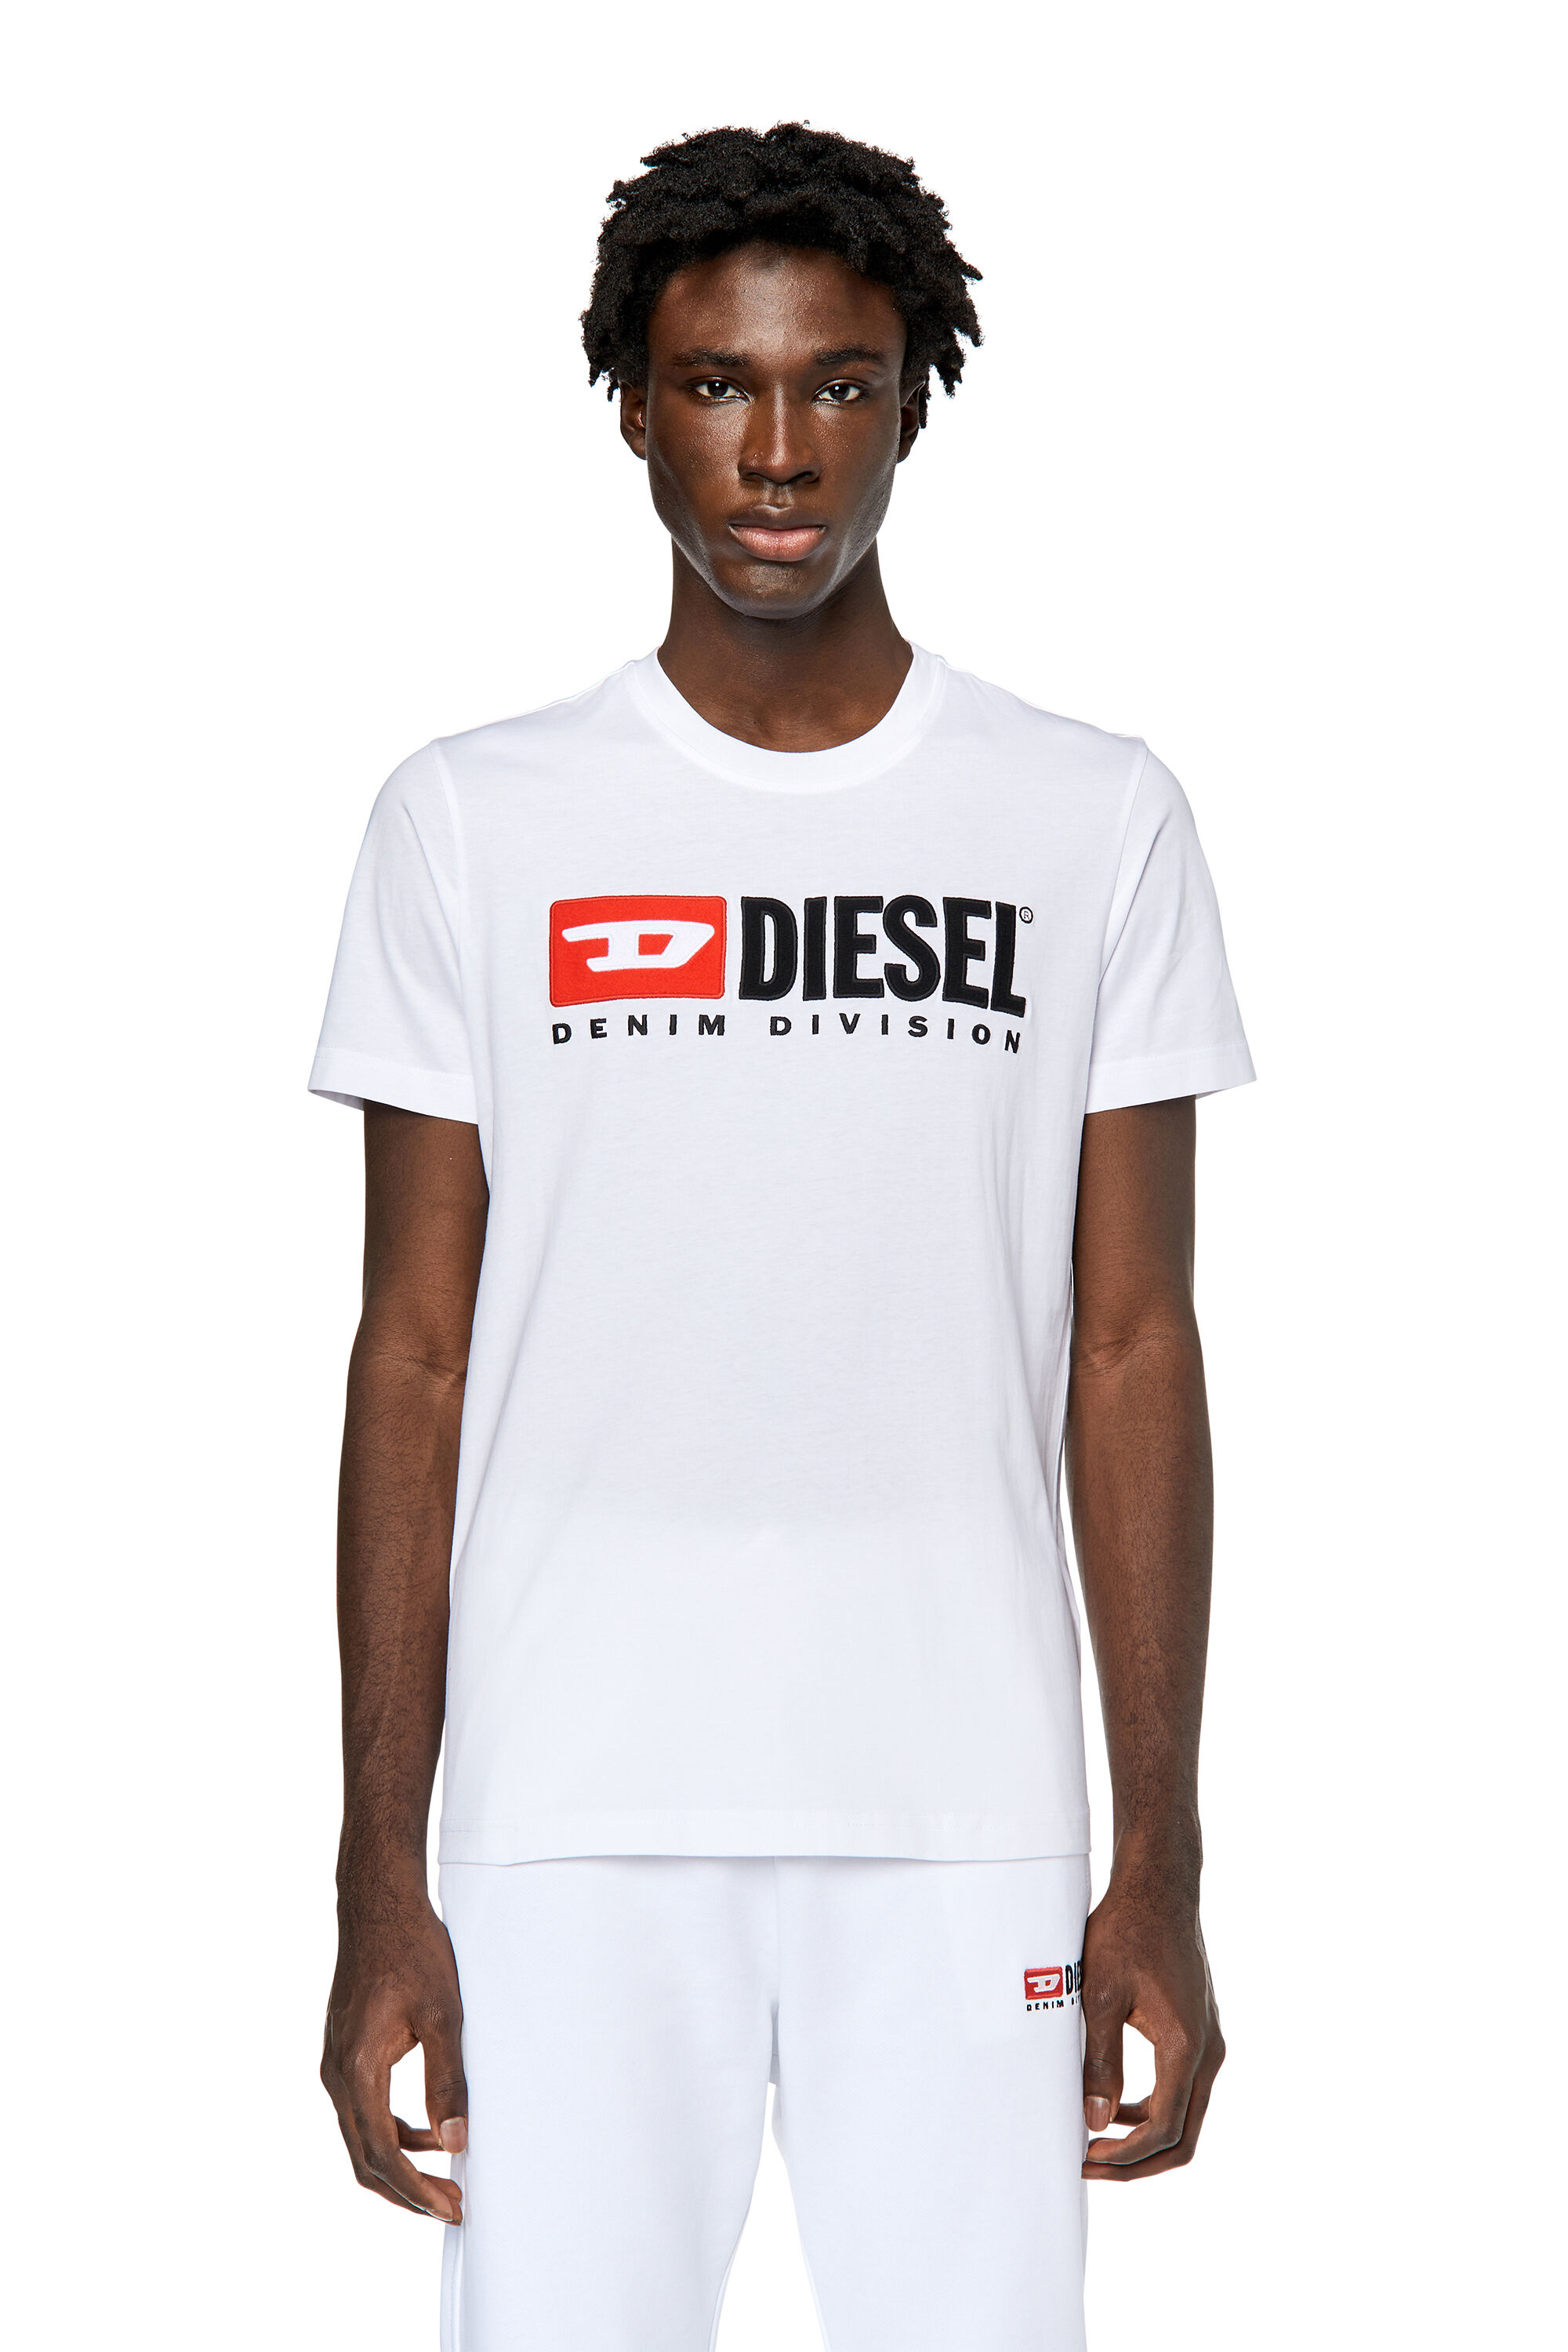 DIESEL T-DIEGOR-L1, Lead Men's T-shirt